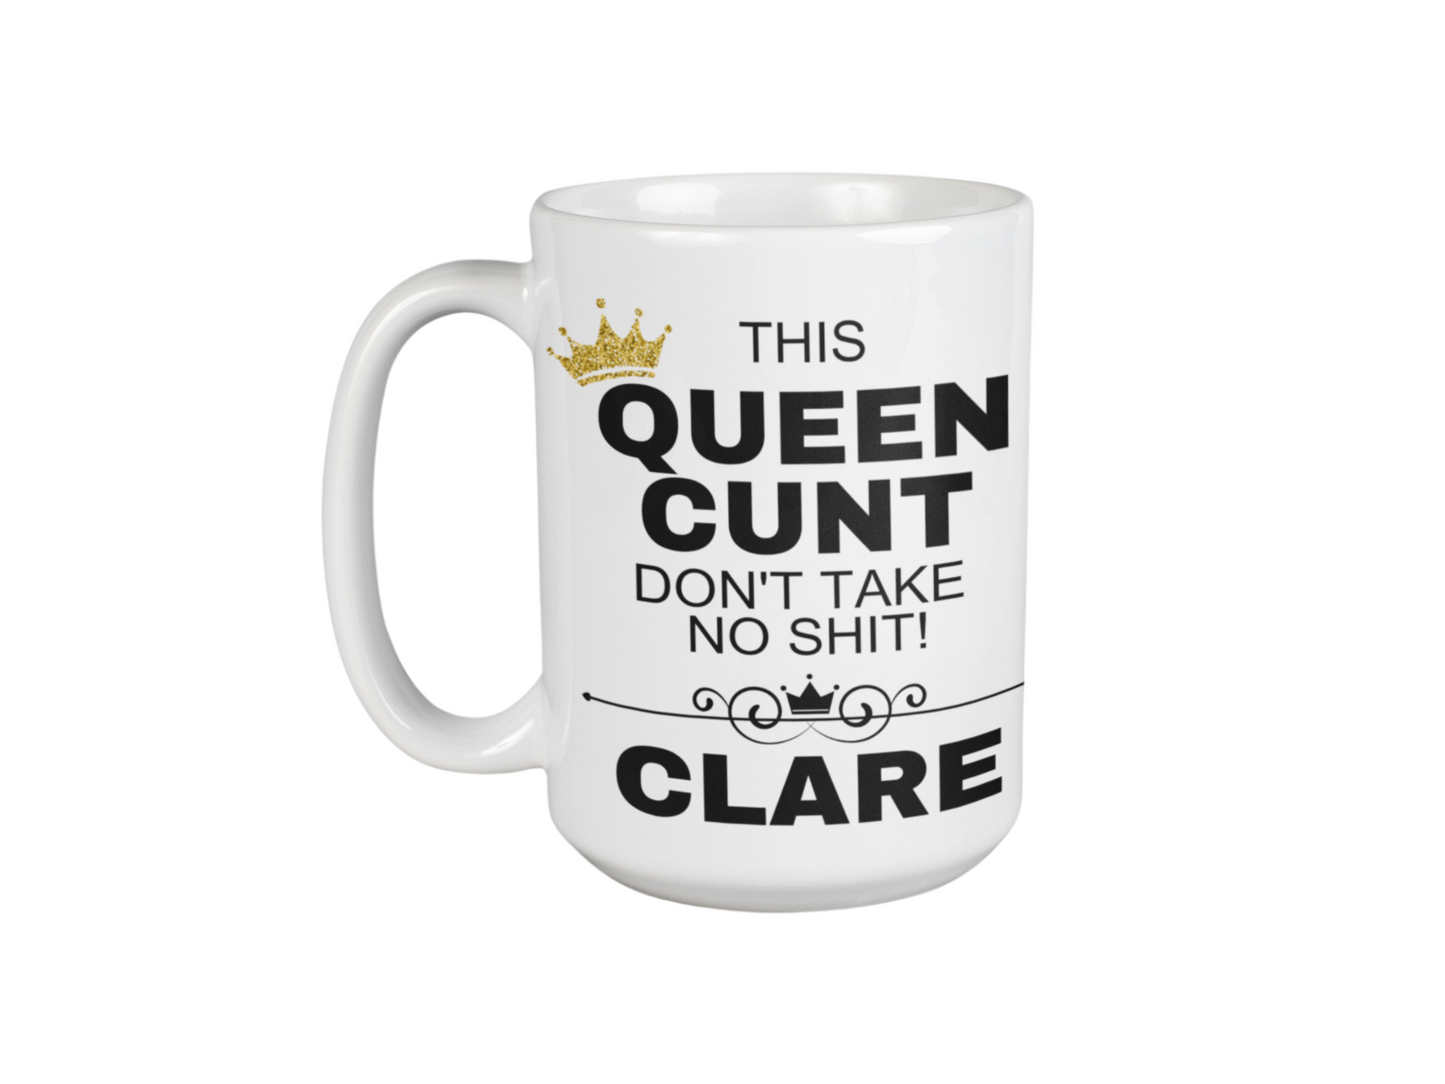 Queen cunt funny coffee mug